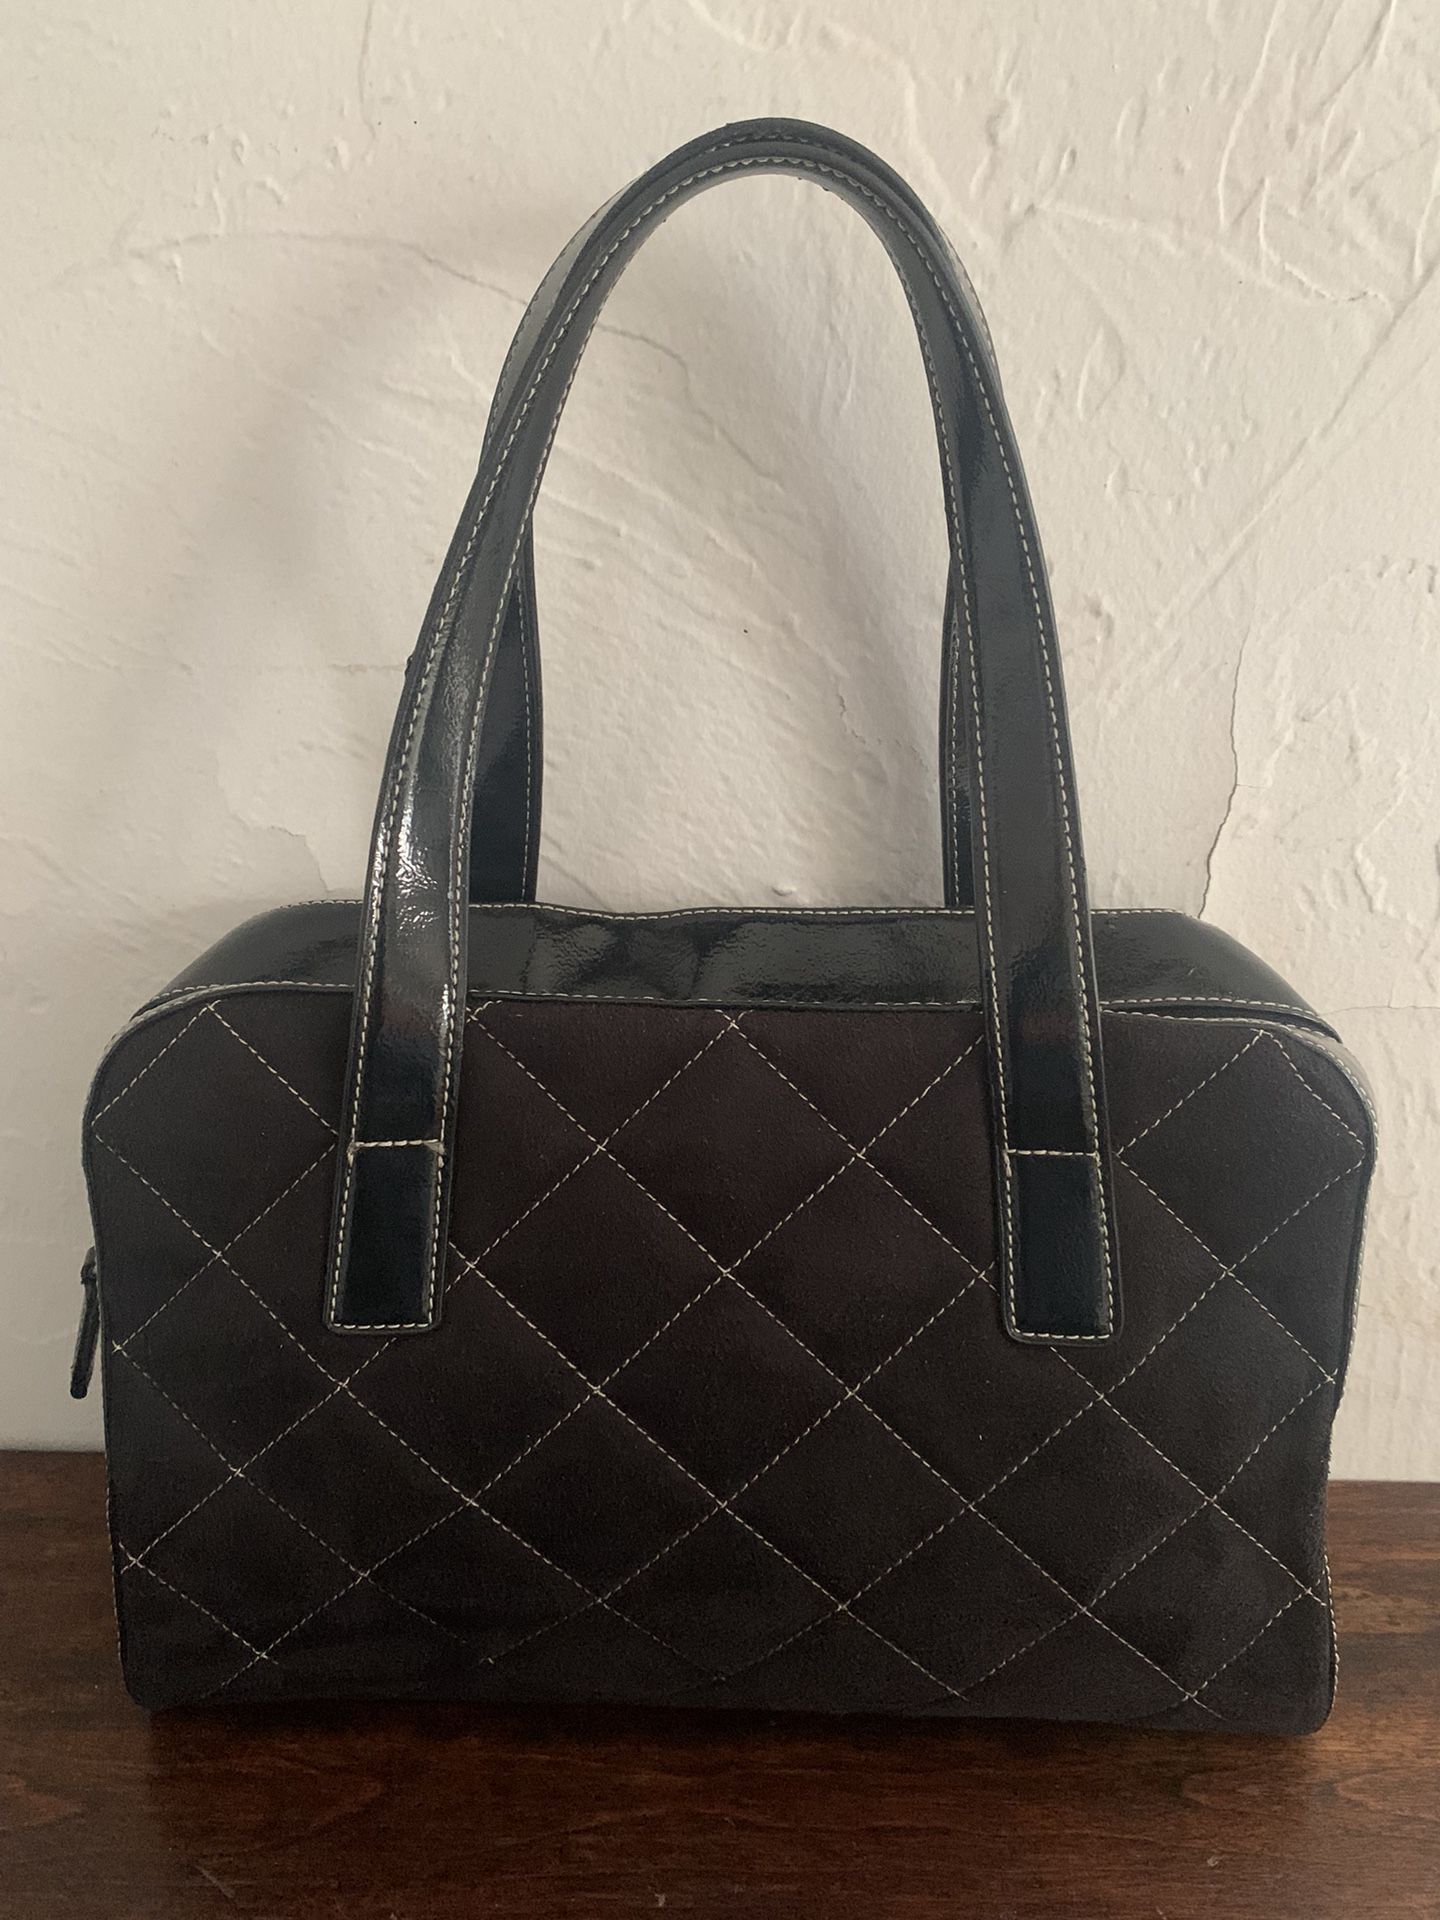 Black Quilted Suede Handbag Purse with Hi-Gloss Trim